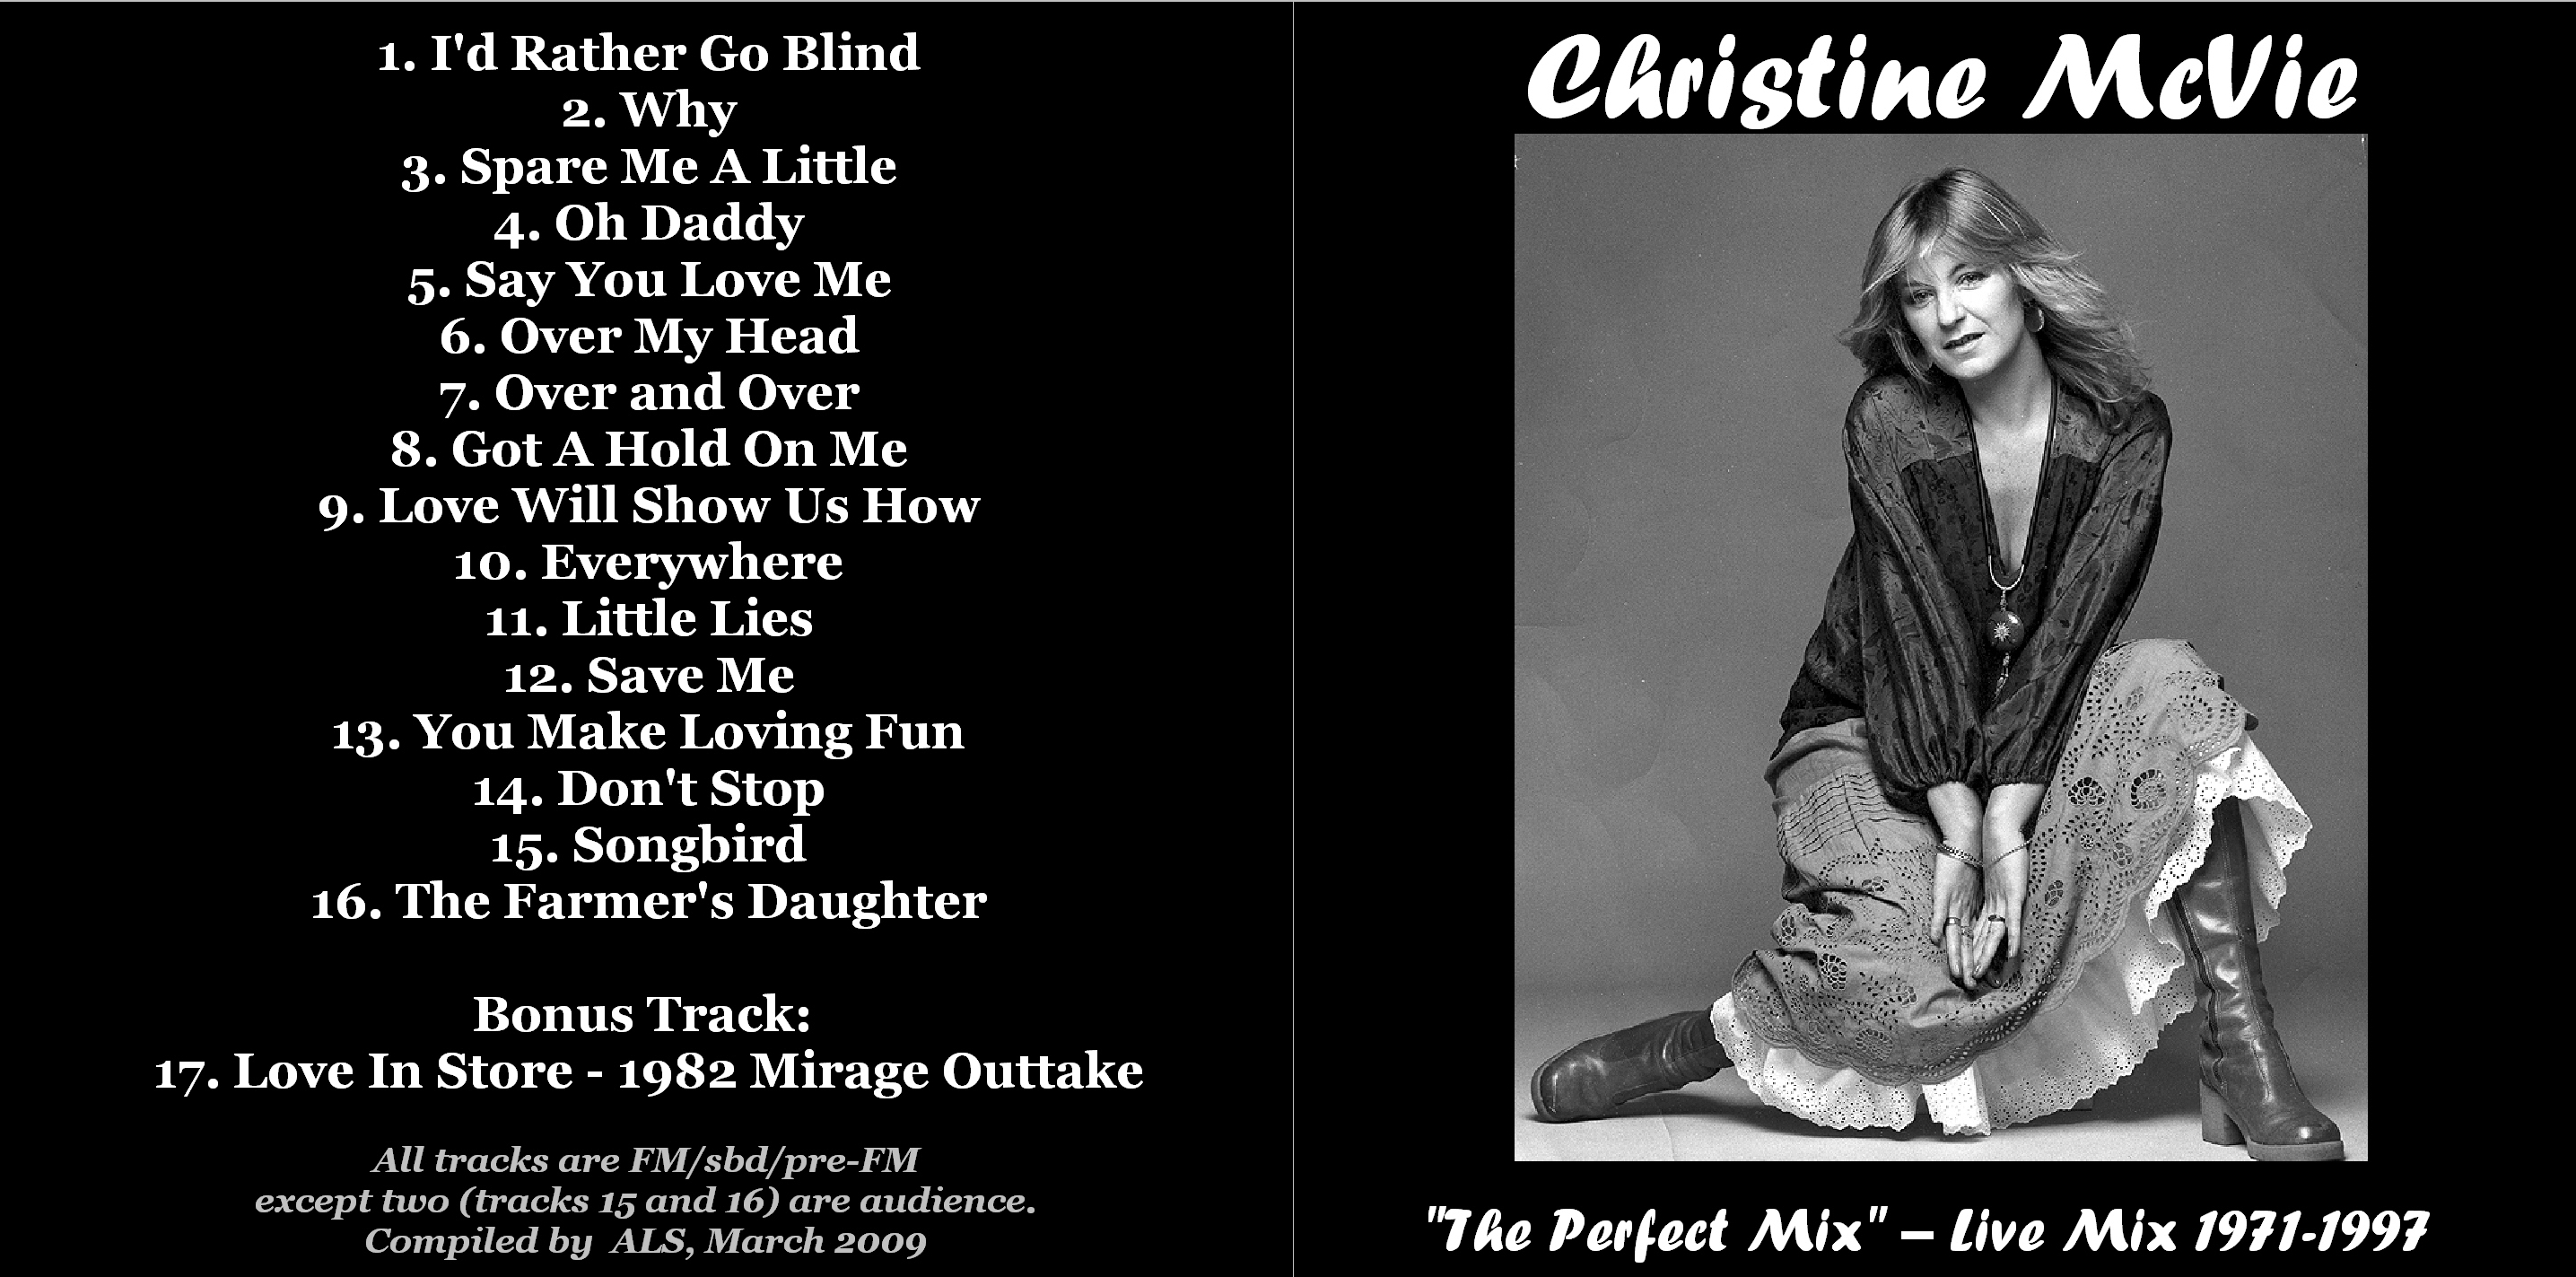 ChristineMcVie1971-1997PerfectMixLive (3).jpg